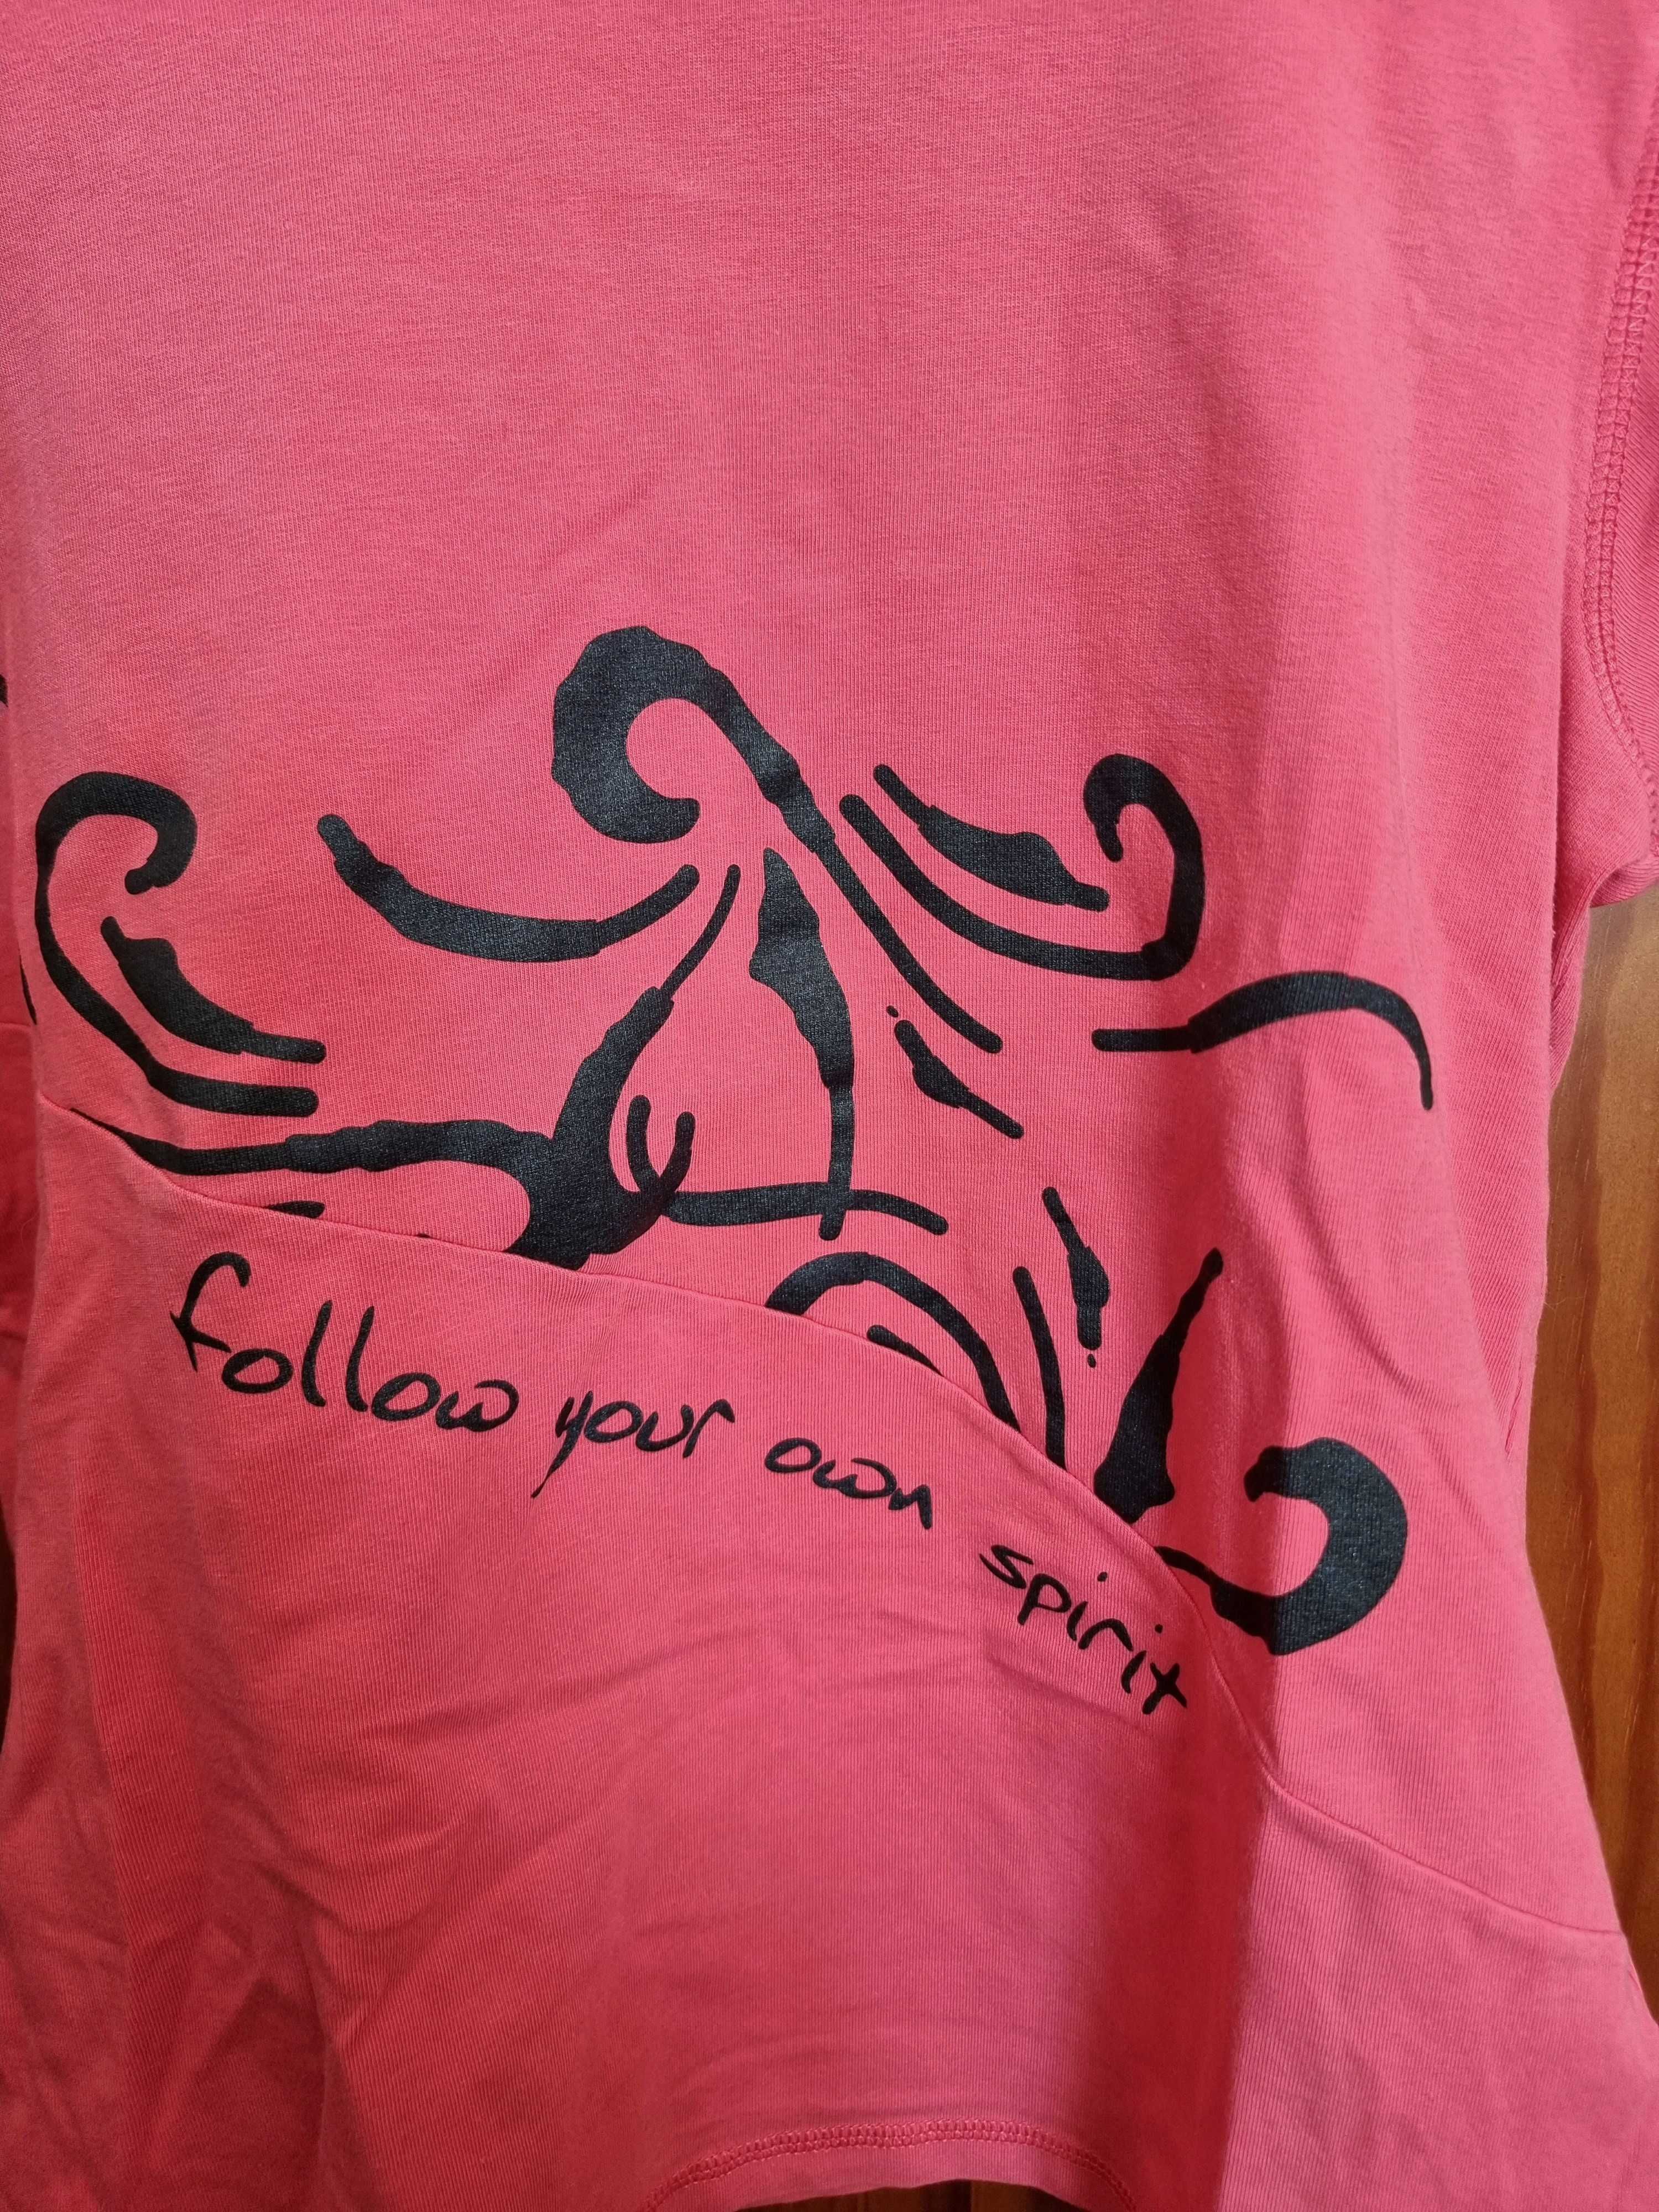 T-shirt rosa "Follow your own spirit" Sport Zone, tamanho M